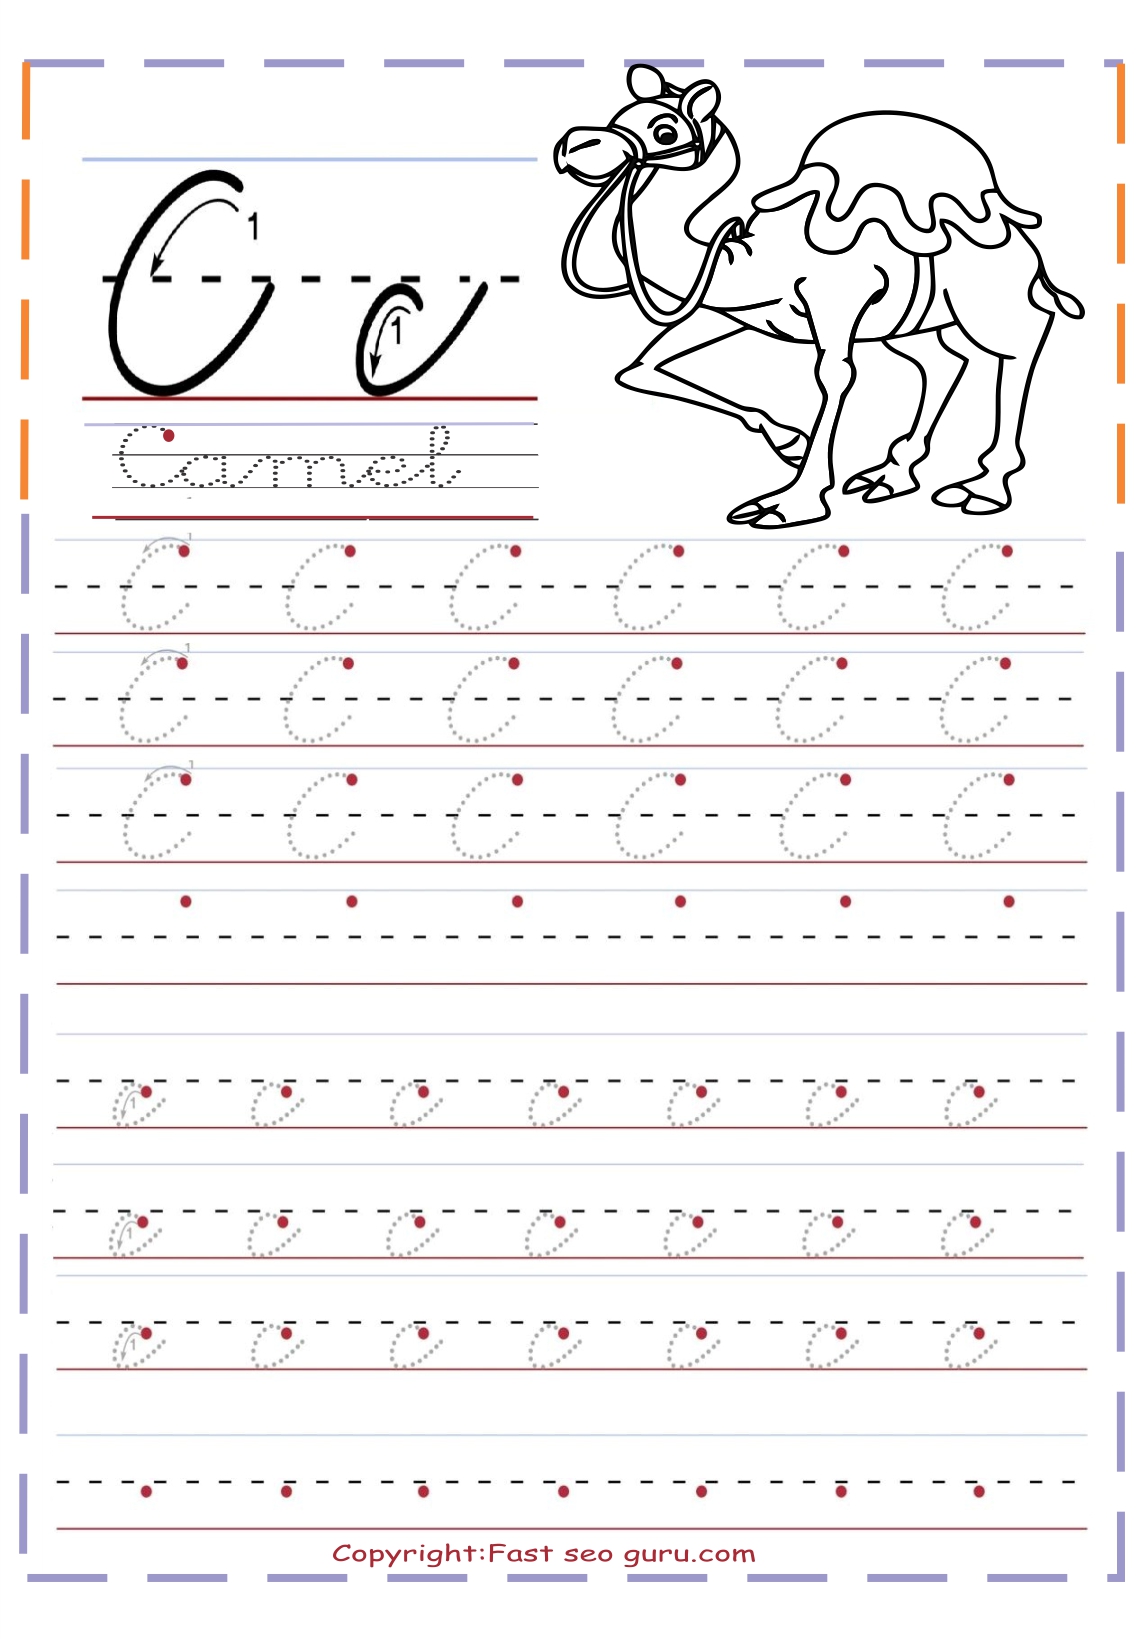 Printable cursive tracing handwriting practice worksheets letter C